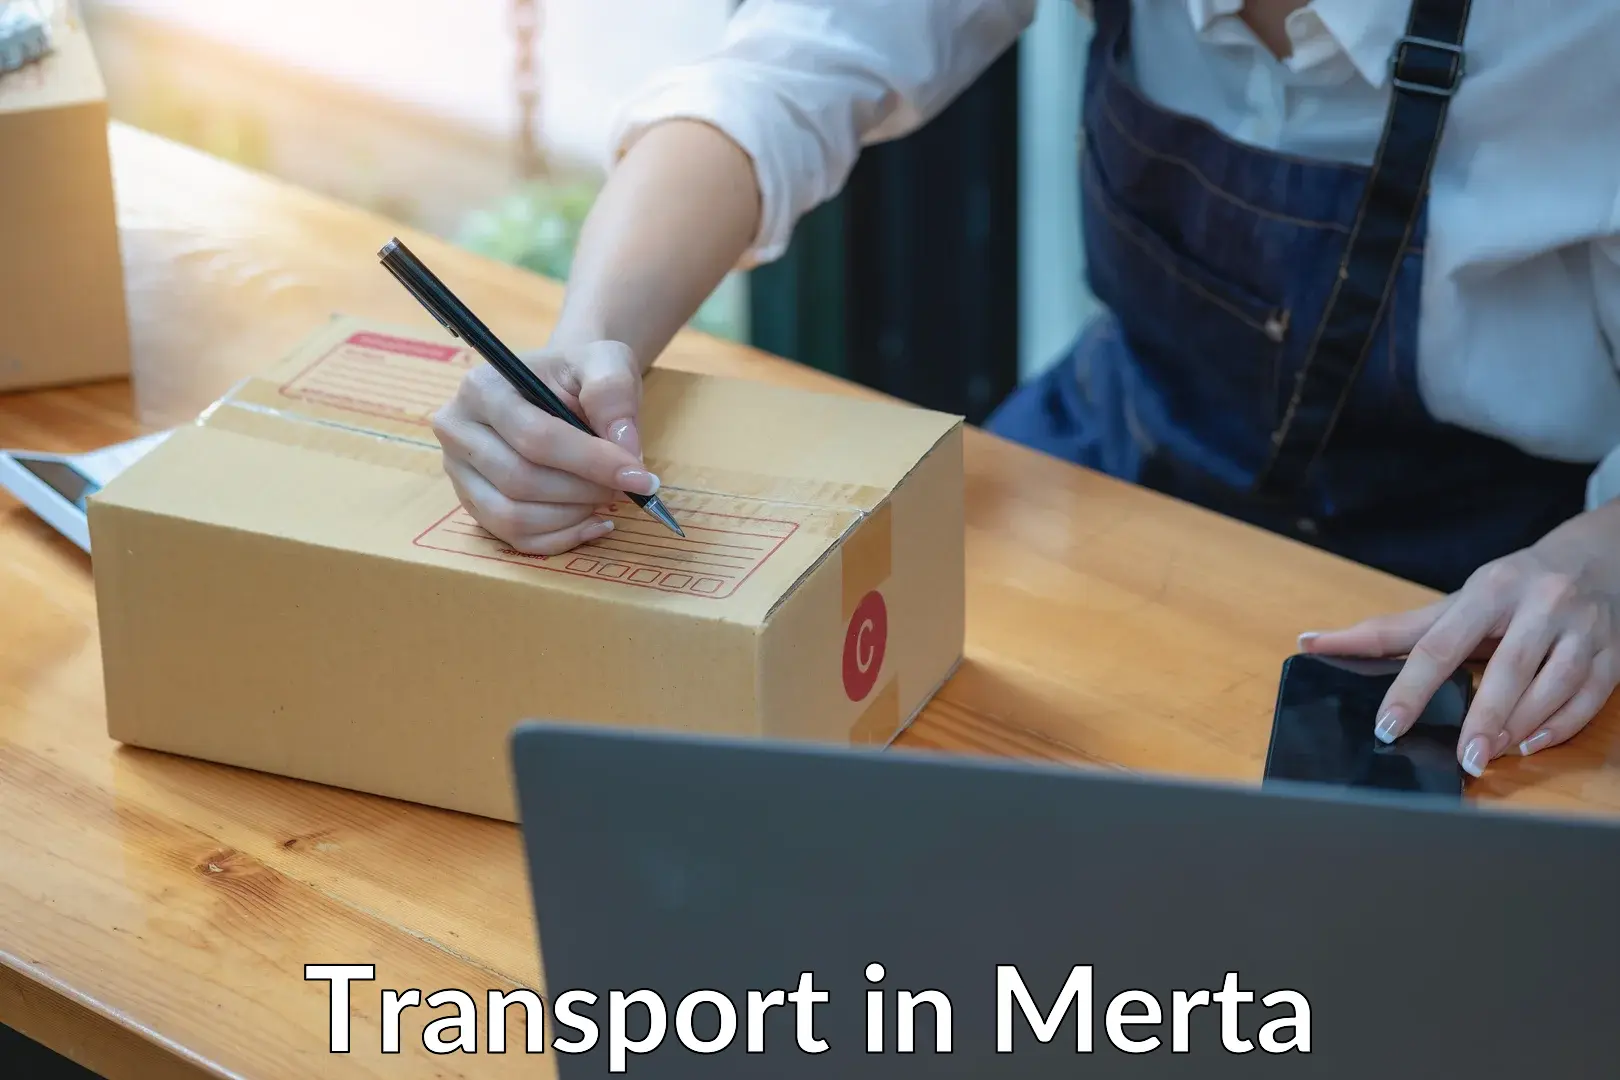 Transport in sharing in Merta